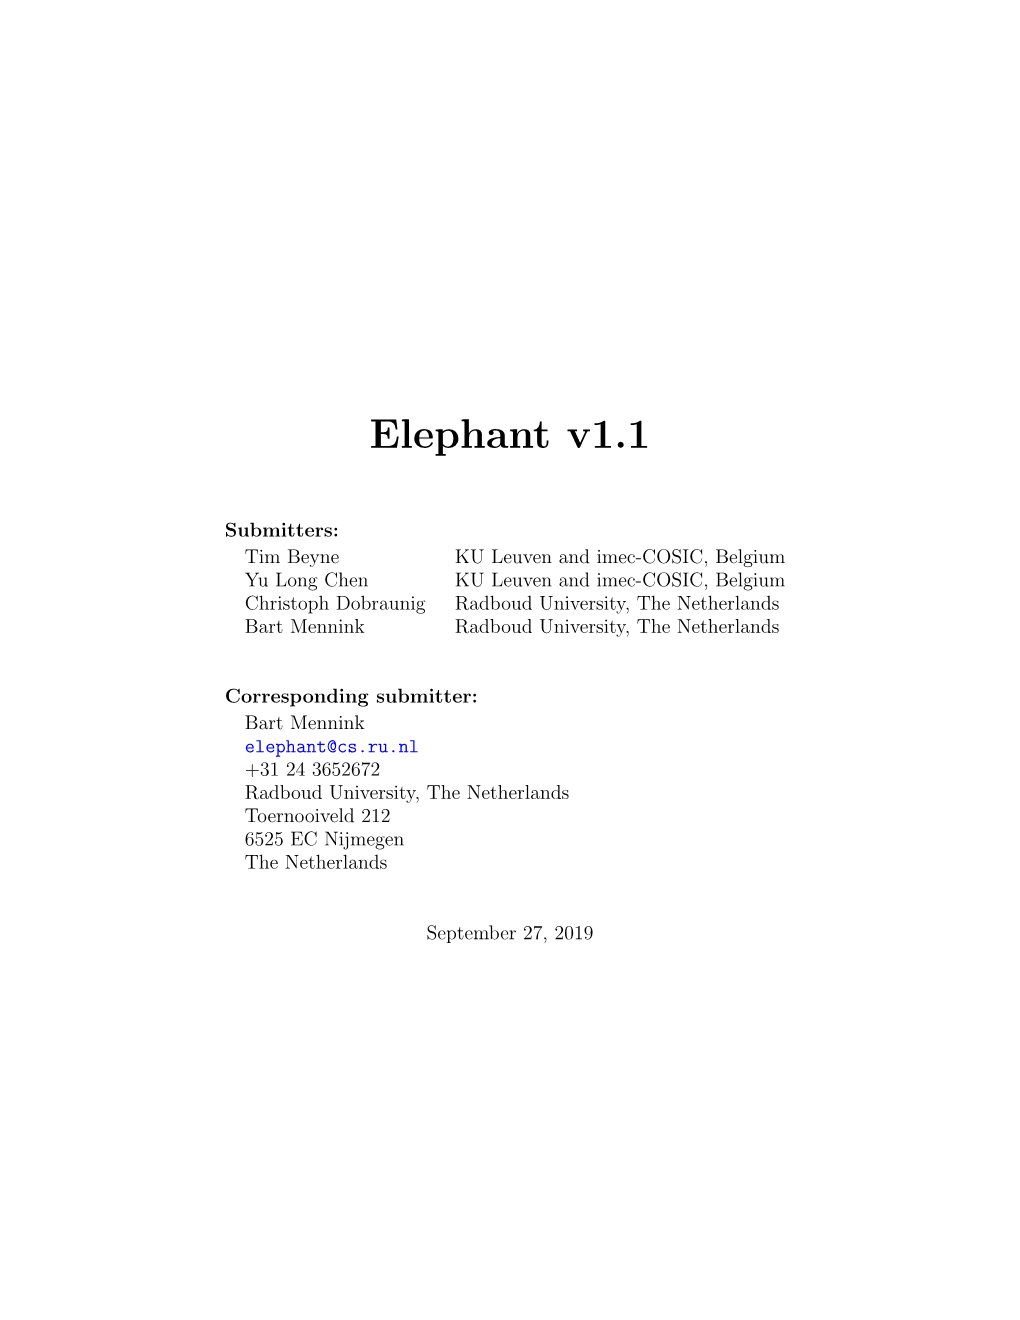 Elephant Specification